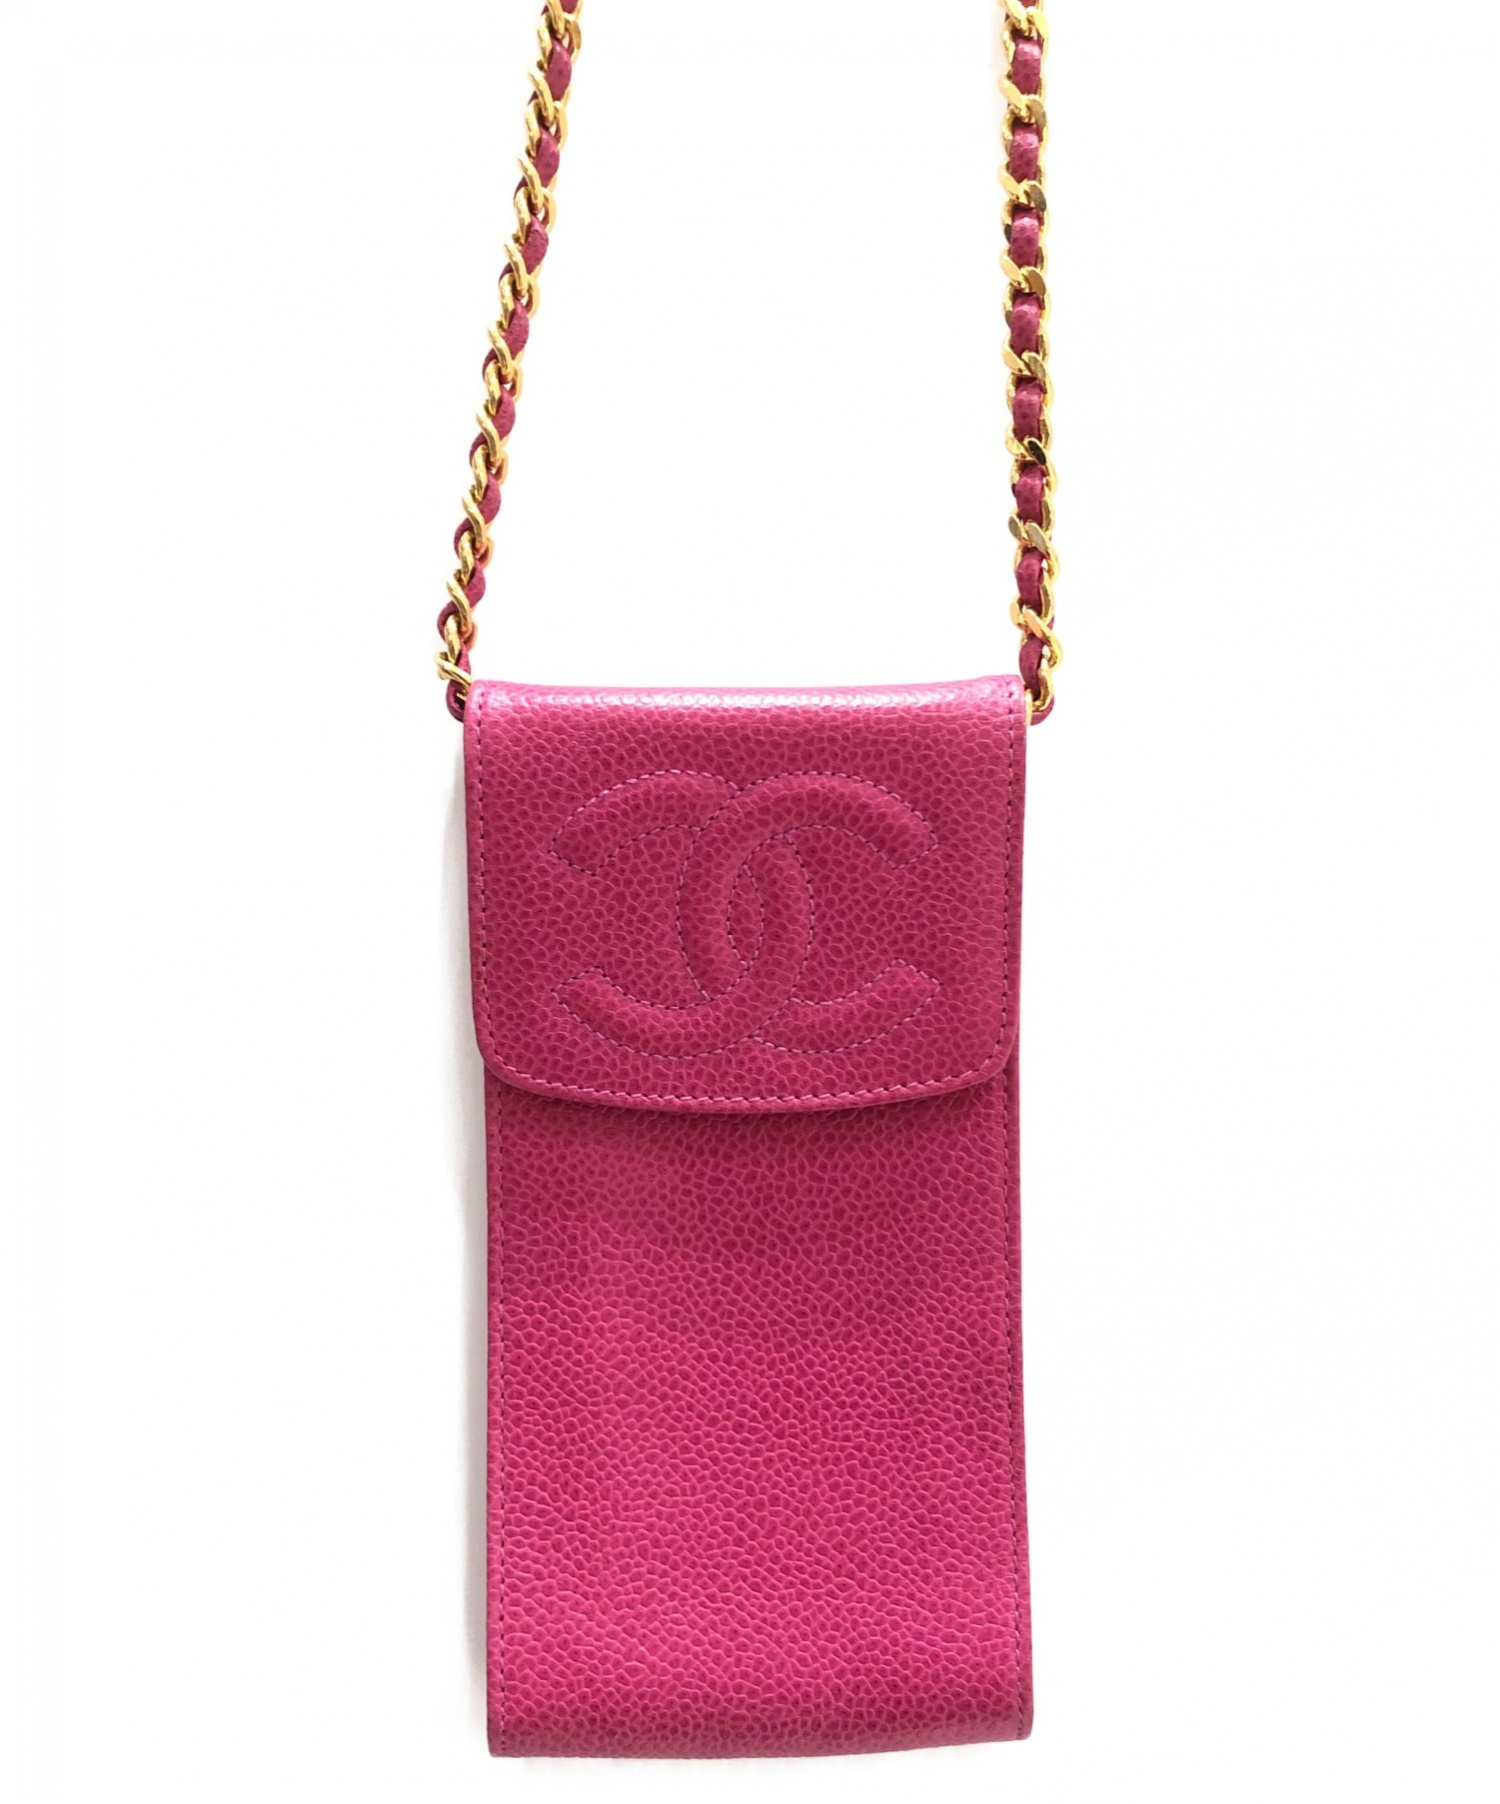 Chanel シャネル ショルダーポーチ ピンク サイズ キャビアスキン ブランド古着の通販サイト ブランドコレクト